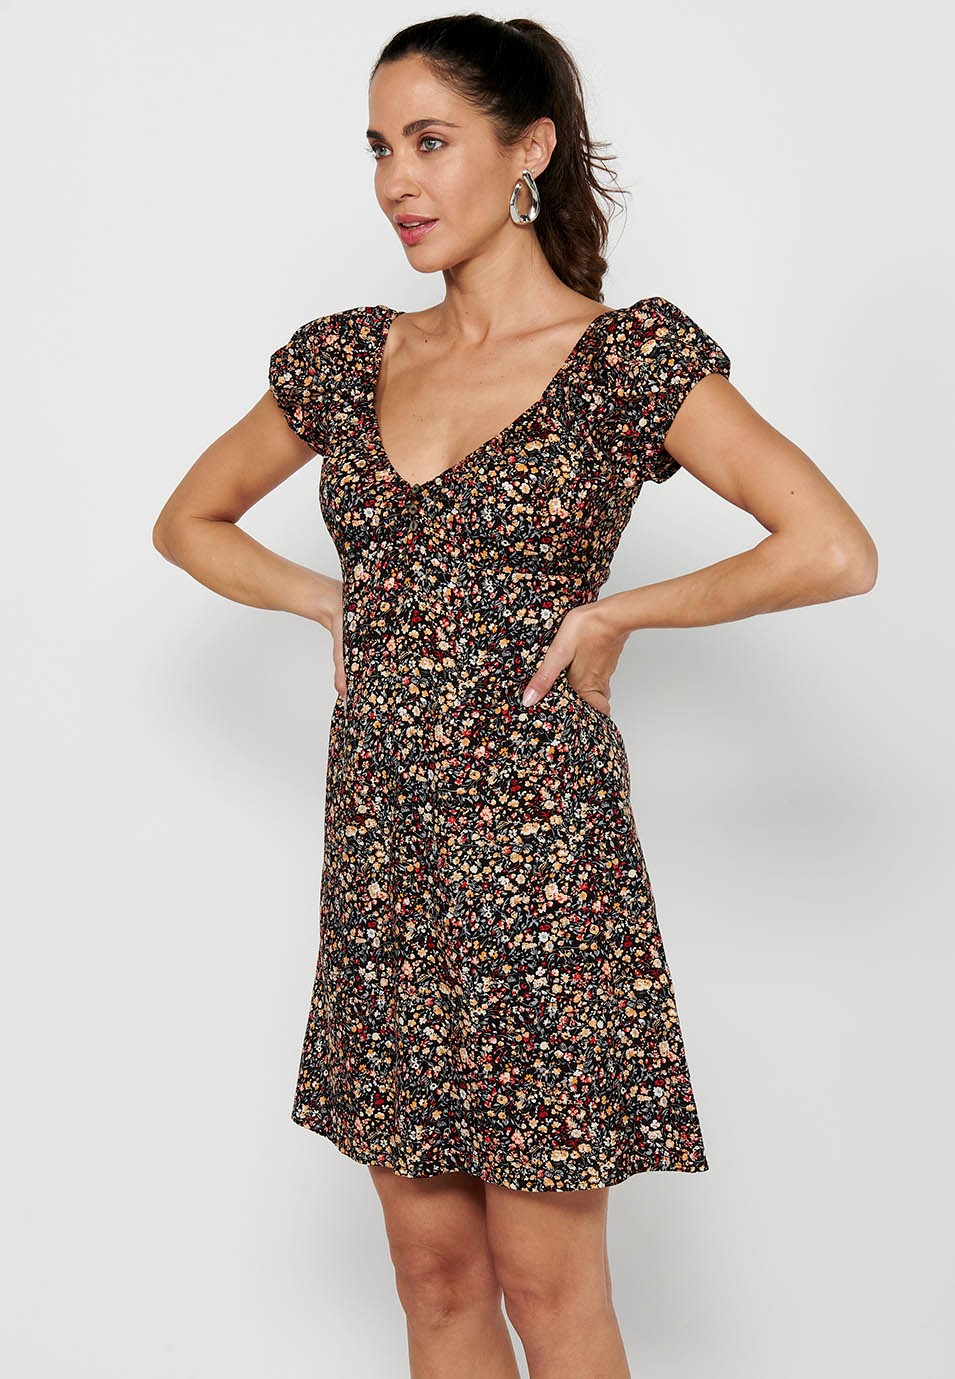 Damen-Kleid mit mehrfarbigem Blumendruck, kurzen Ärmeln, gerafftem Ausschnitt und Reißverschluss hinten 2